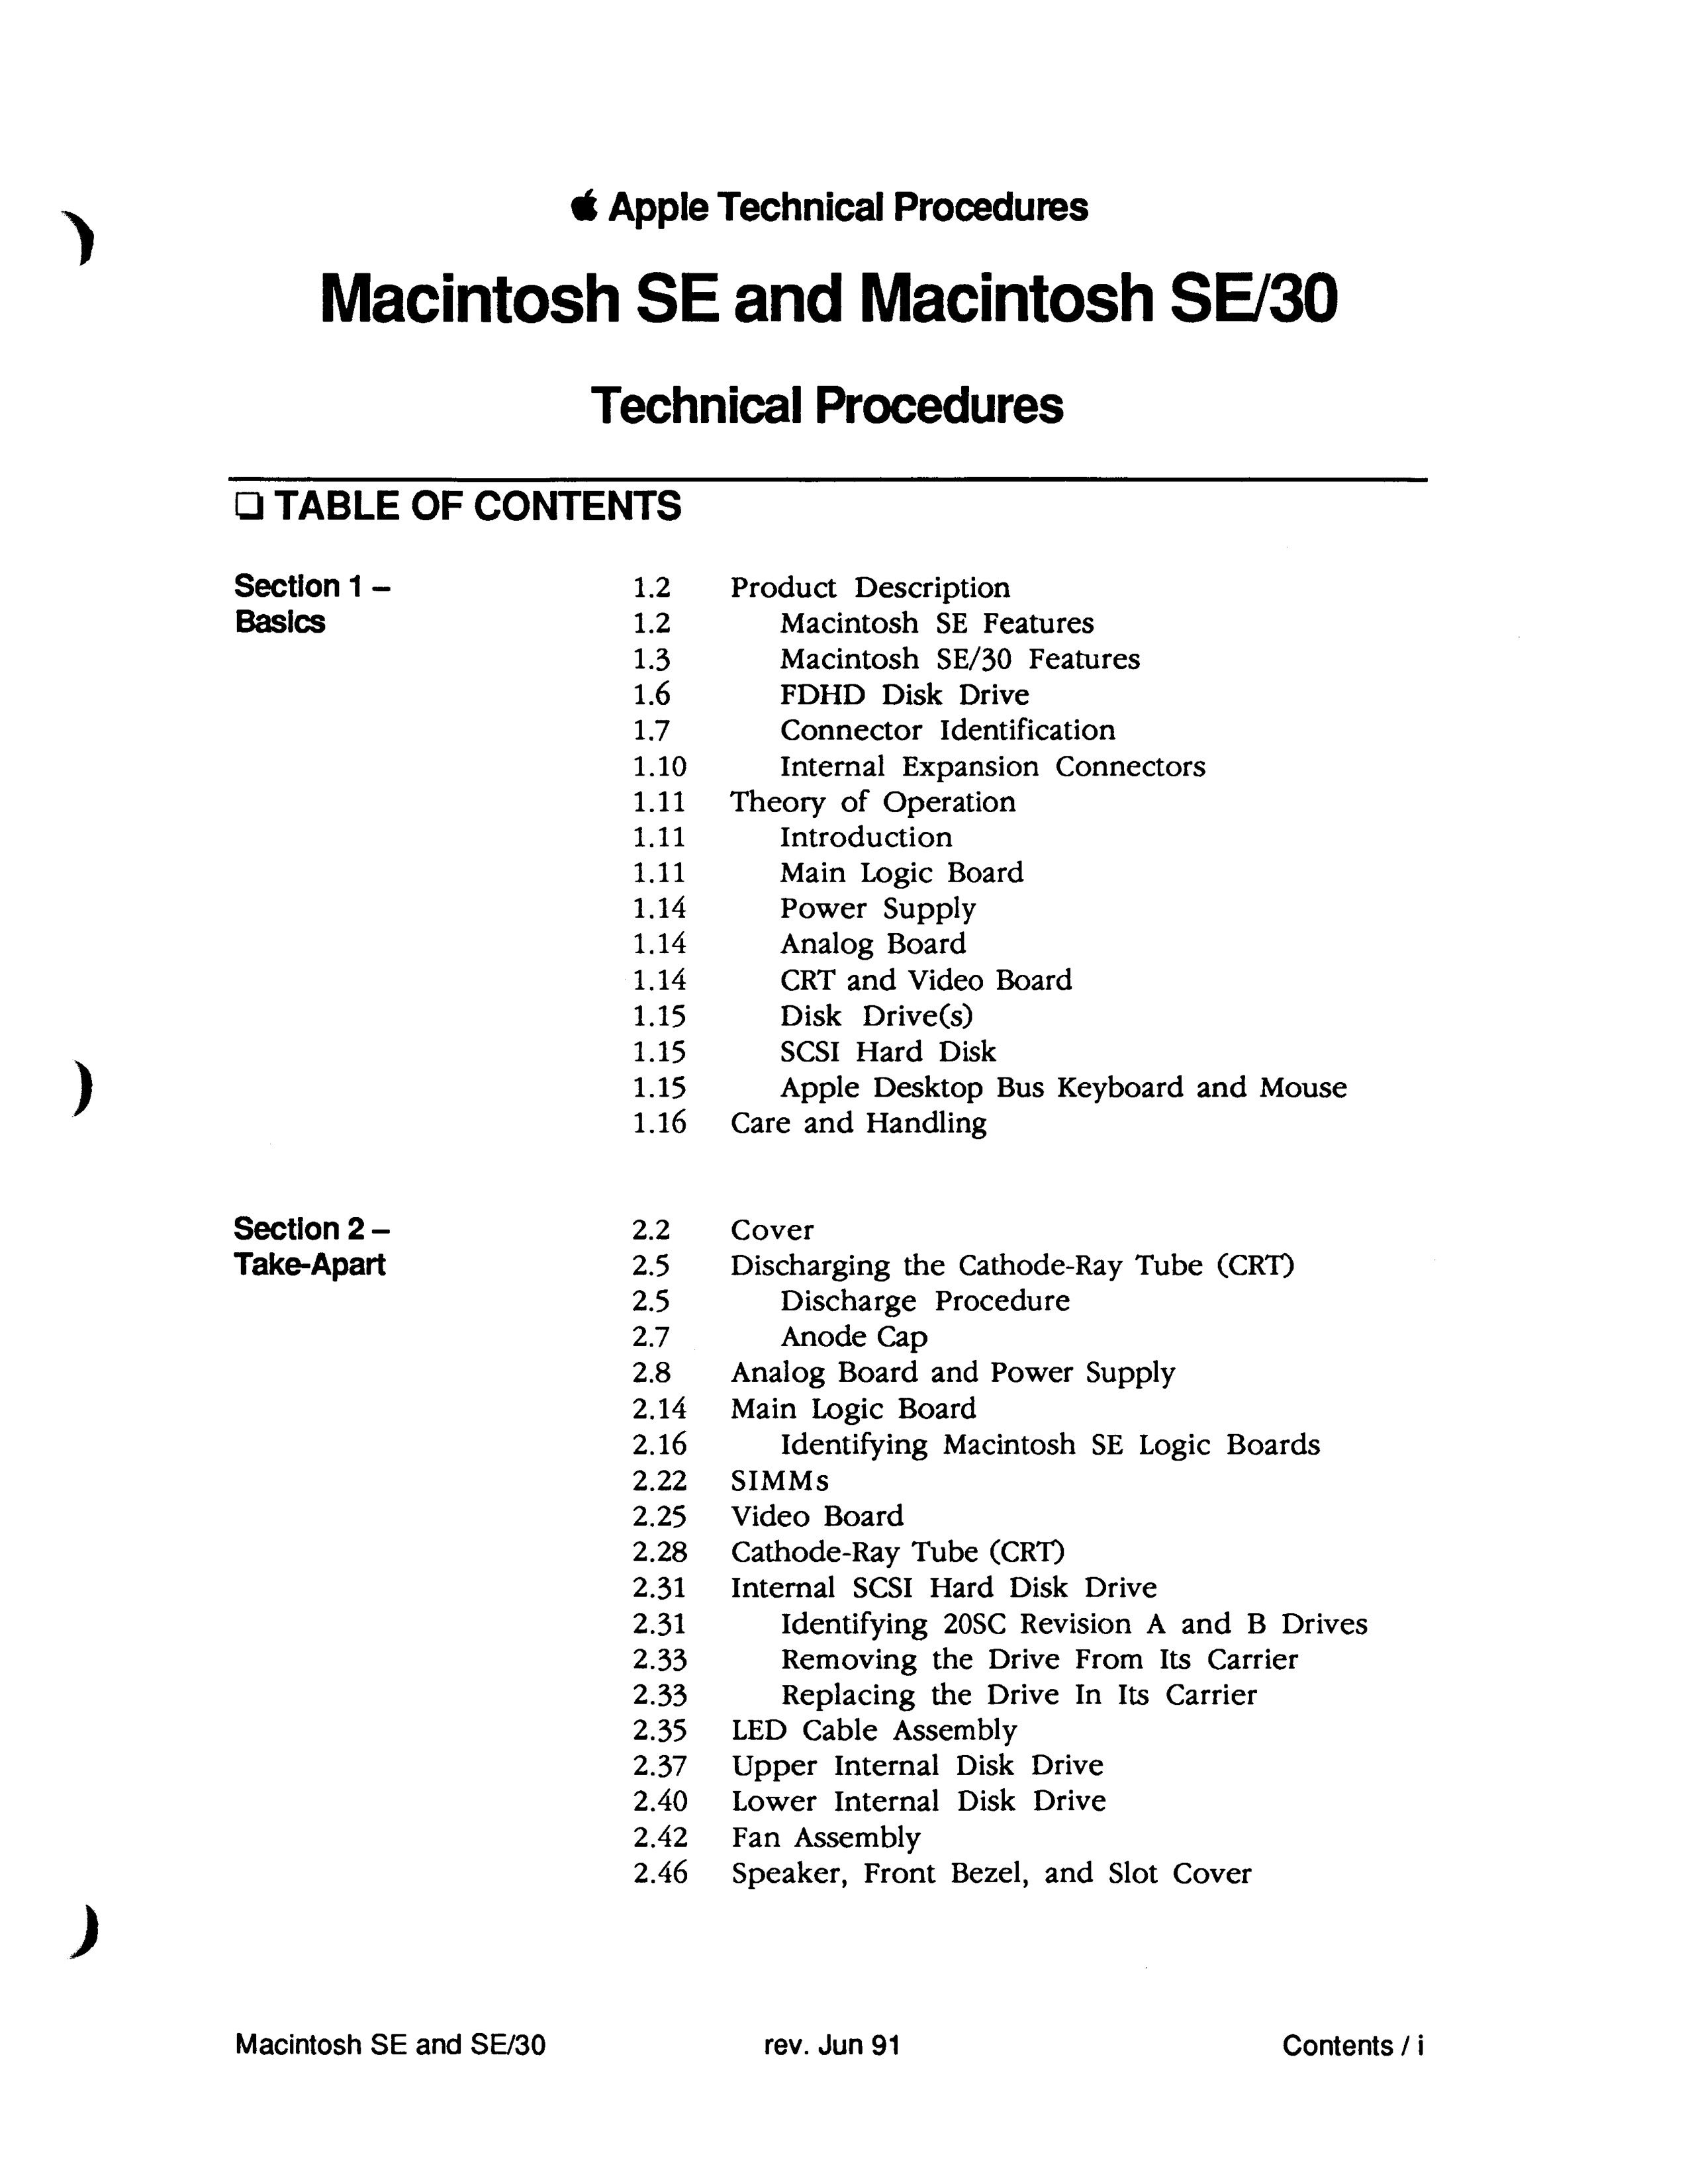 Apple_Technical_Procedures_SEandSE30_Msrch1990_front.jpg